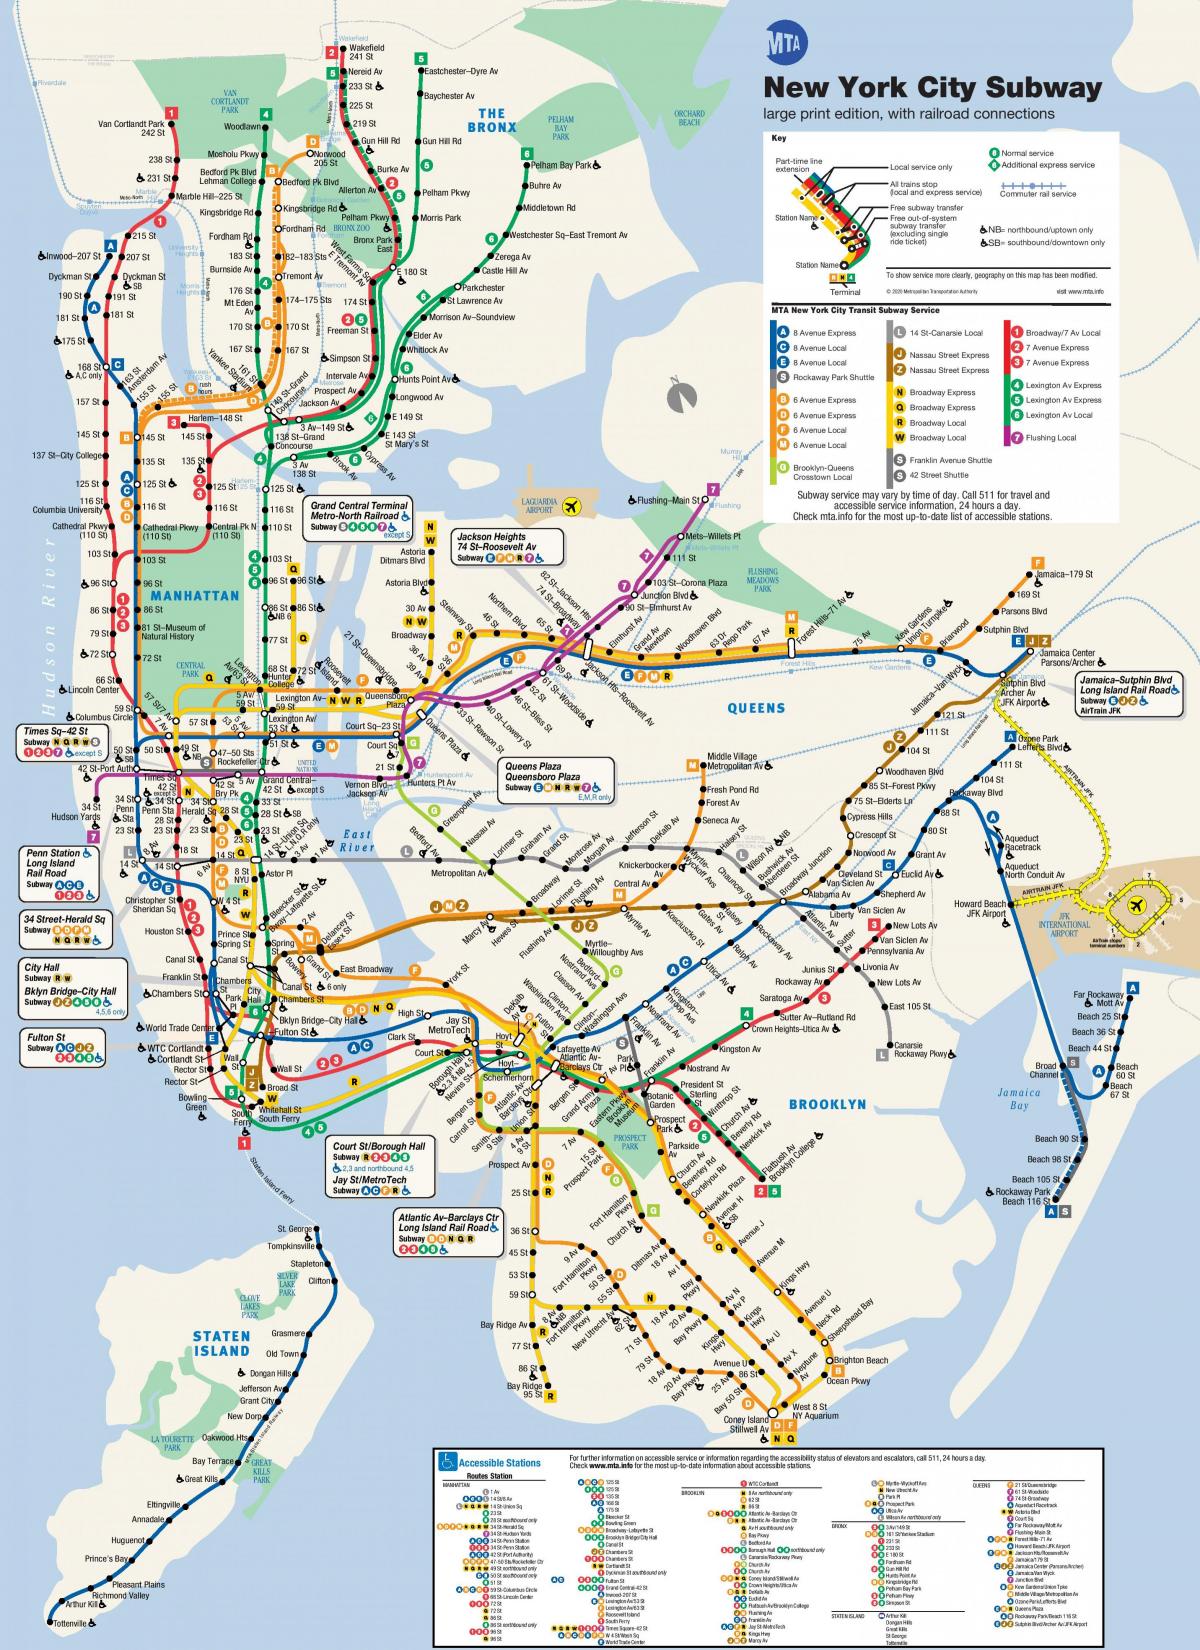 NYC交通地図